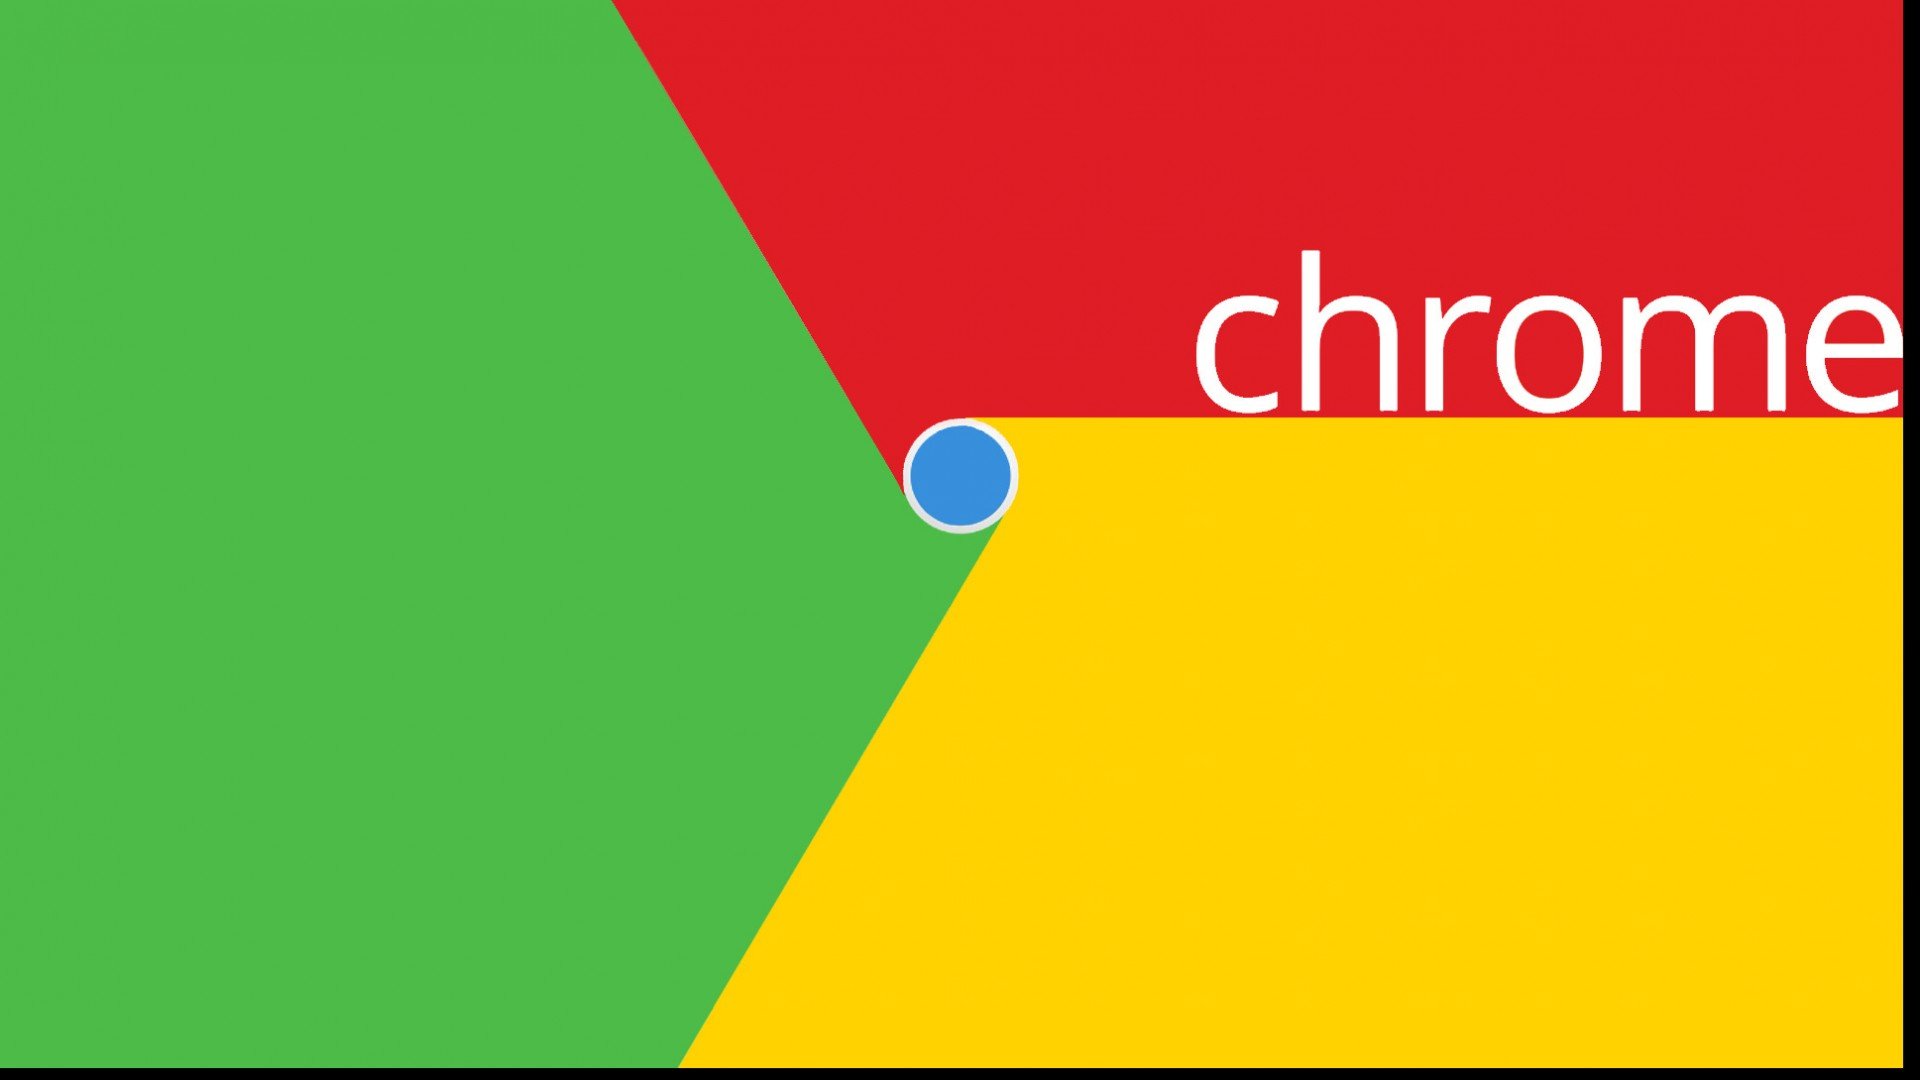 Google Chrome Puter Logo Poster Wallpaper Background